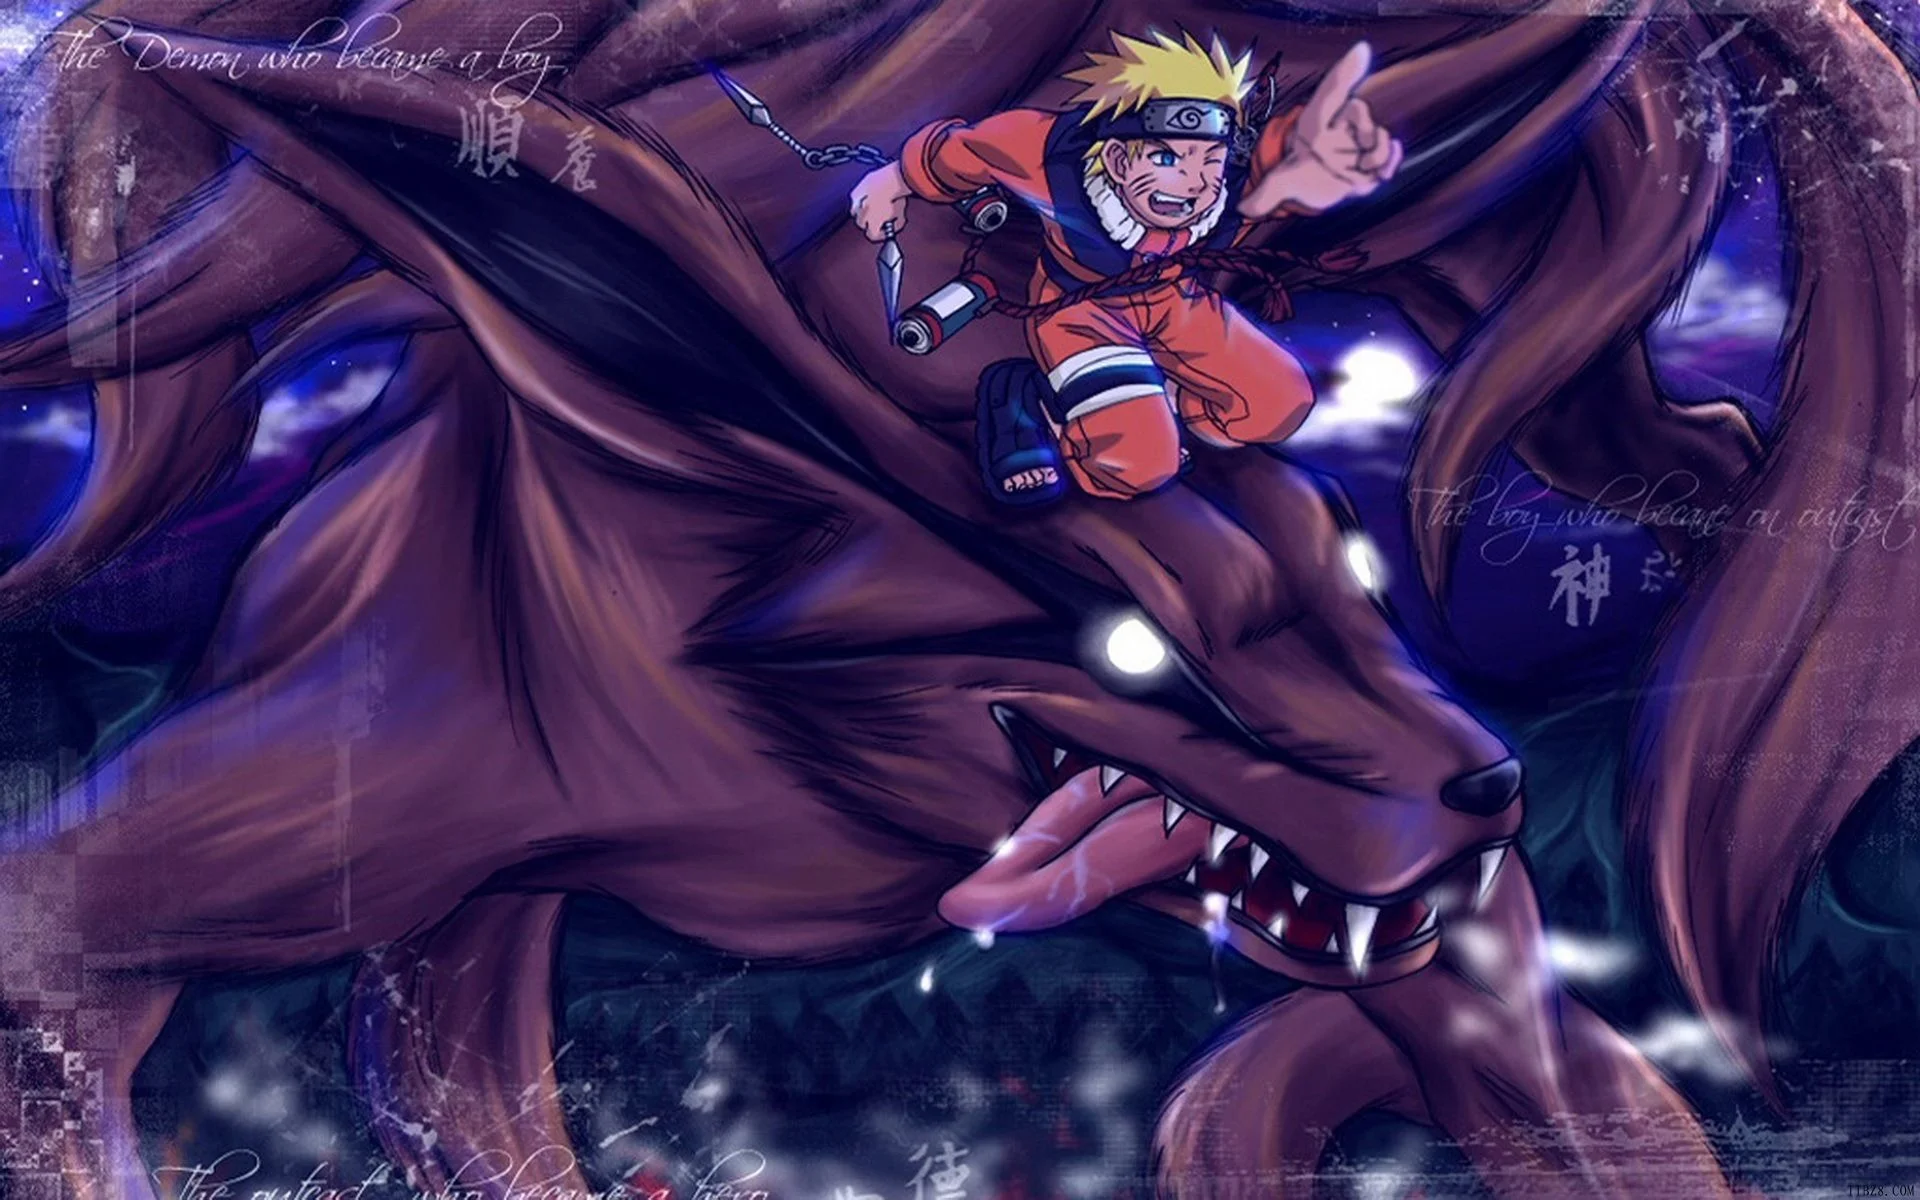 Naruto Vs Sasuke Free Wallpapers For Desktop HD Wallpaper Download 800640 Naruto Free Wallpapers